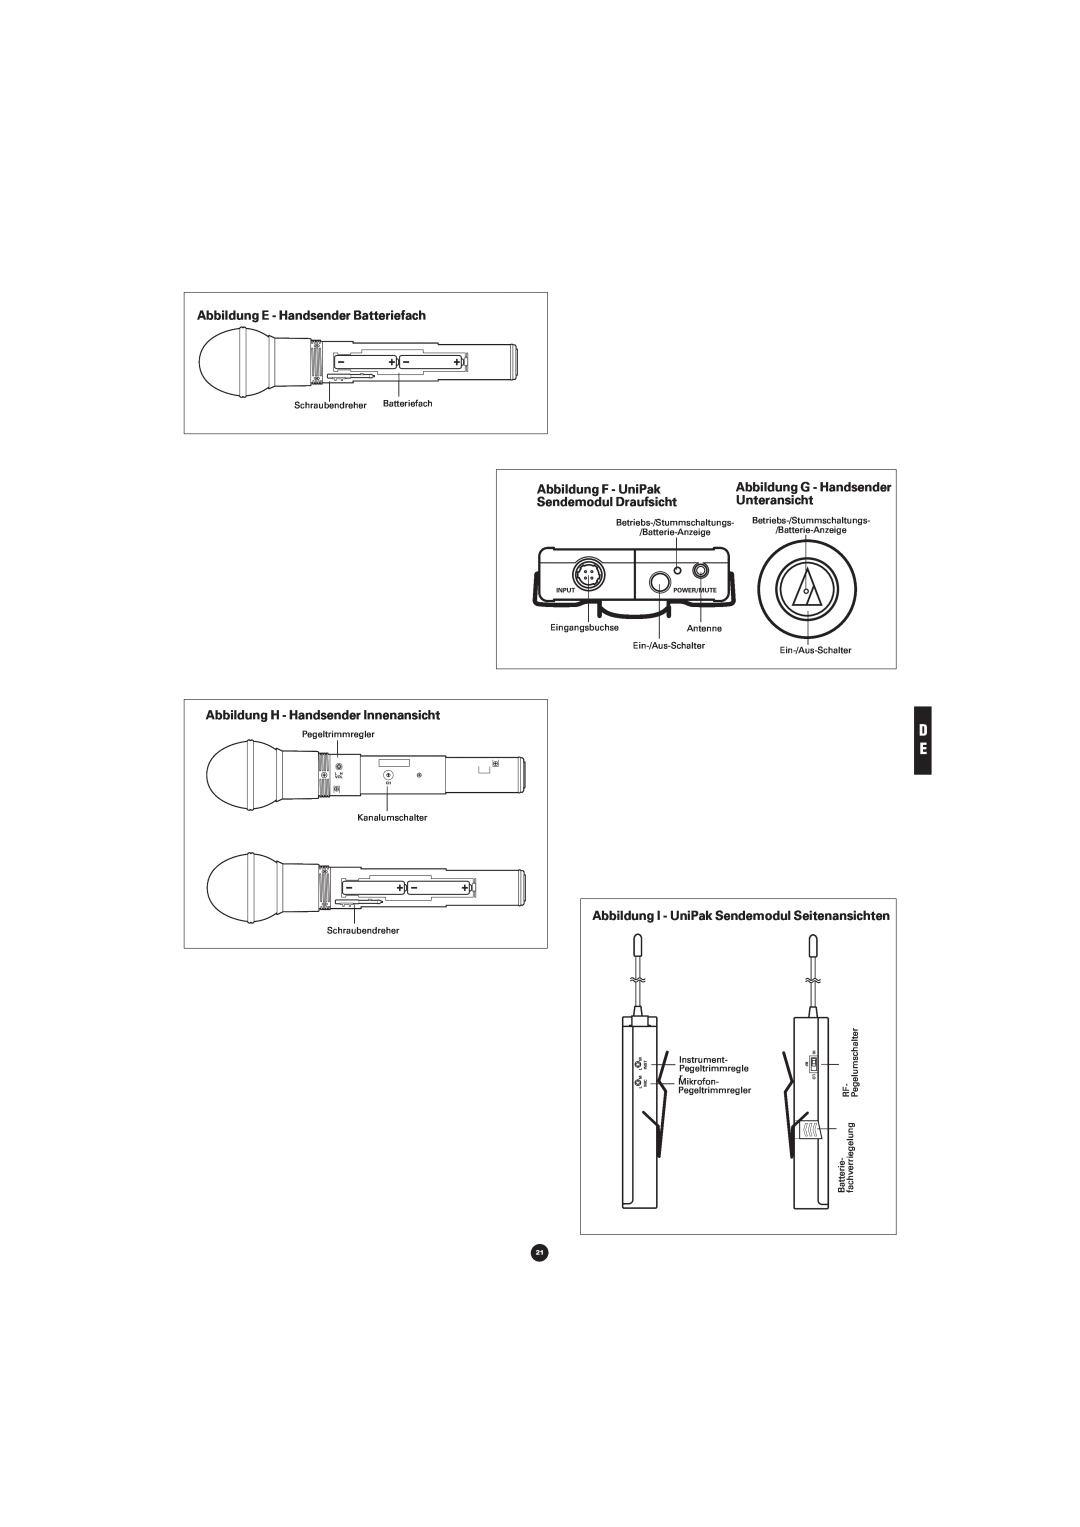 Audio-Technica ATW-701P Abbildung E - Handsender Batteriefach, Abbildung F - UniPak, Sendemodul Draufsicht, Unteransicht 